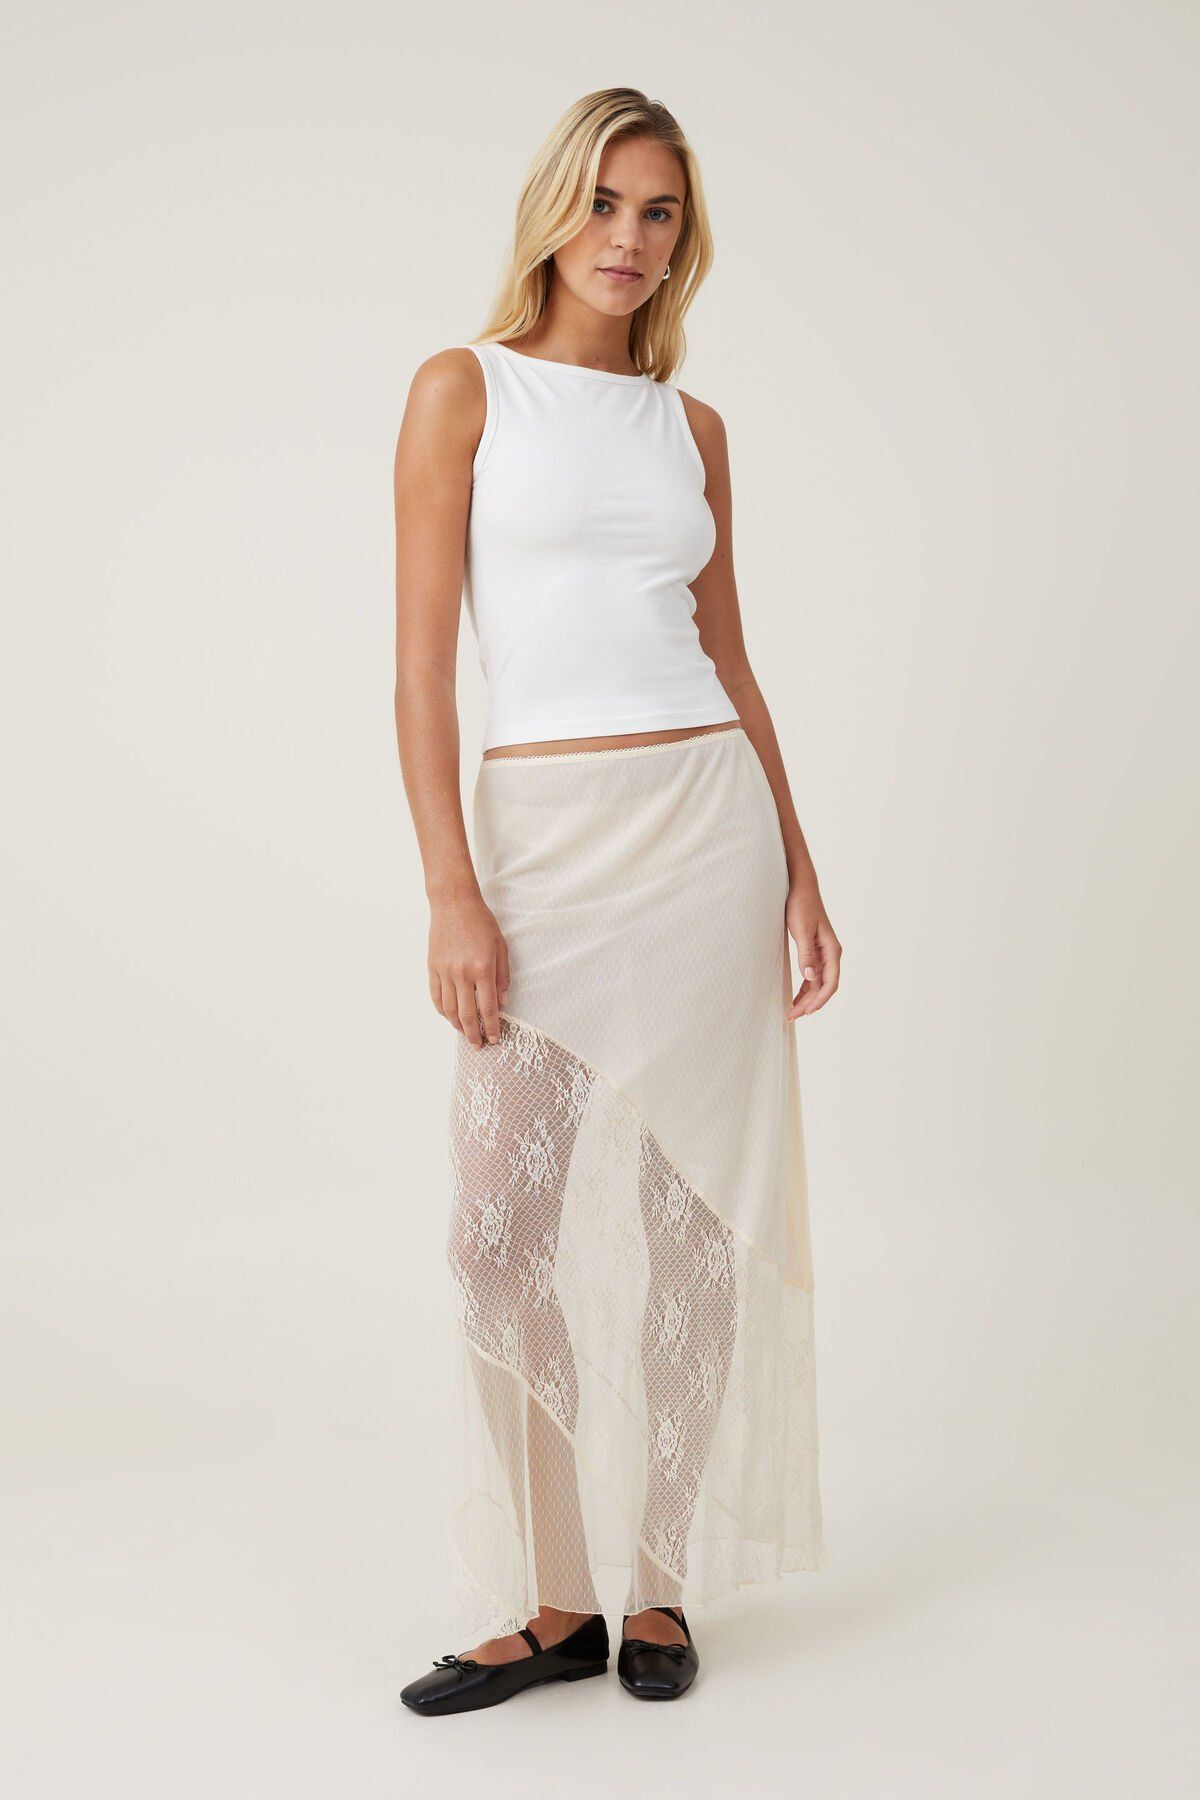 Lace Panel Maxi Skirt | Cotton On (US)